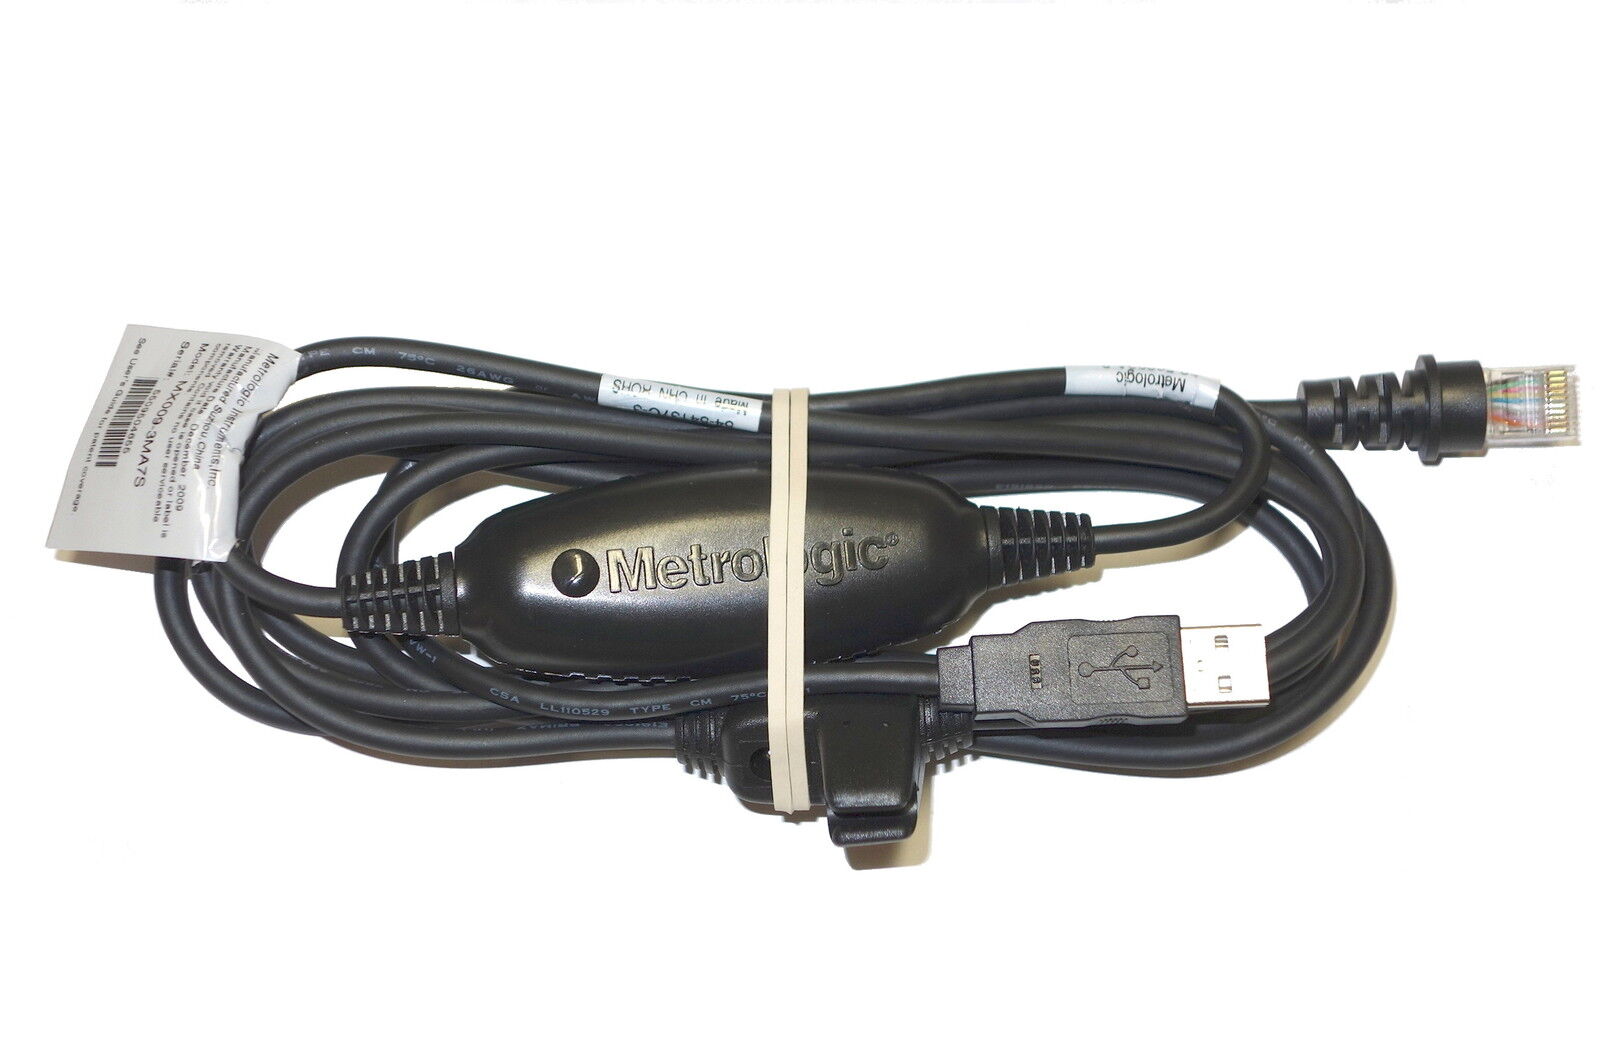 Metrologic MX009 Universal USB Converter Cable MS9520 MS9540 MS7120 MS3580